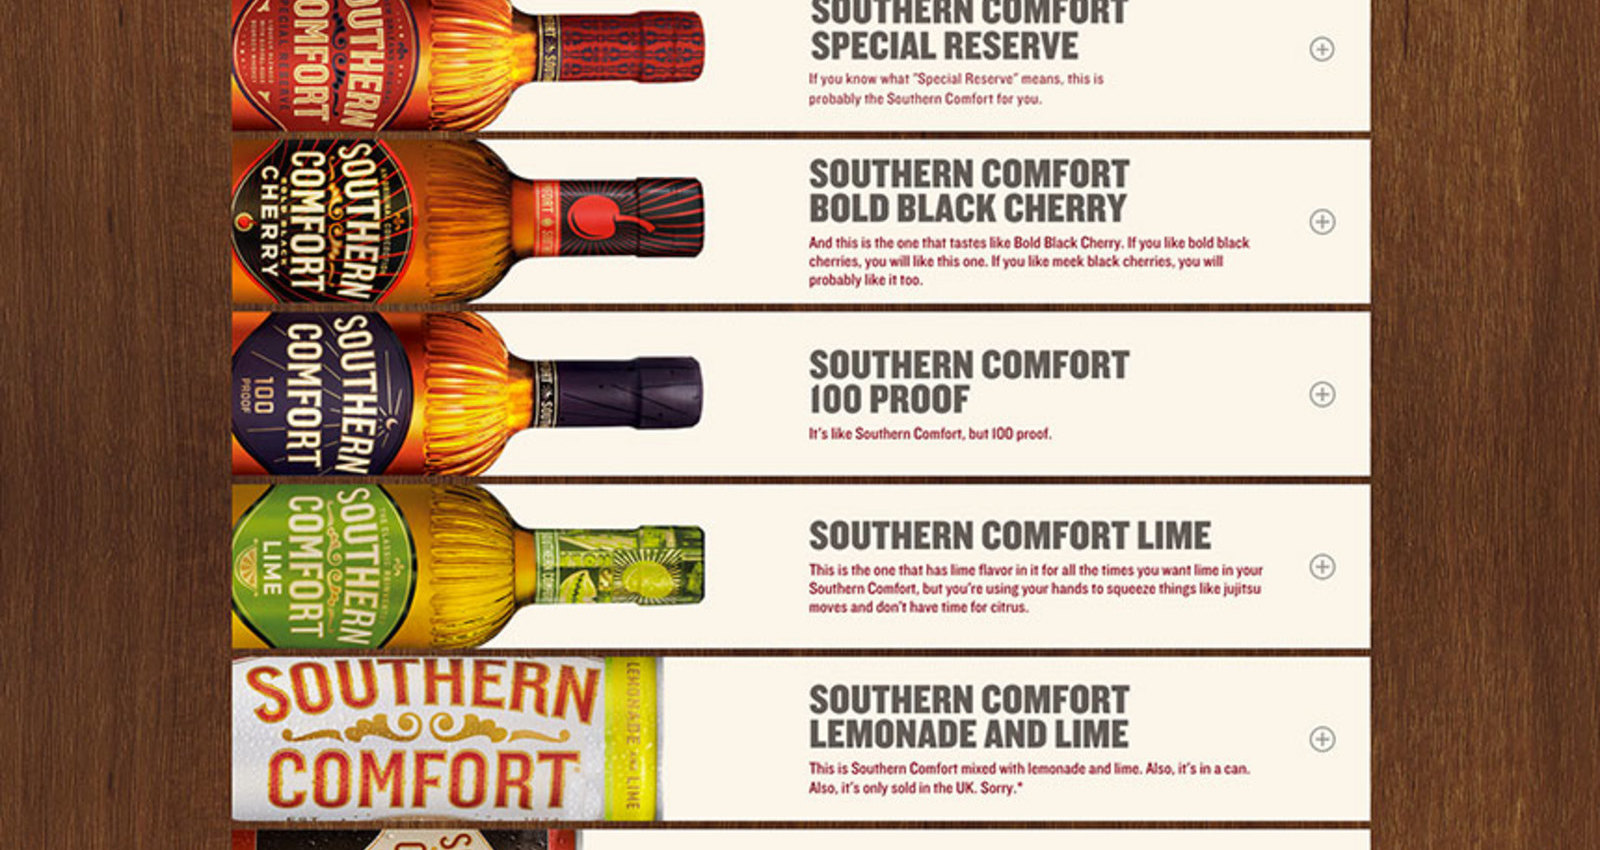 SouthernComfort.com